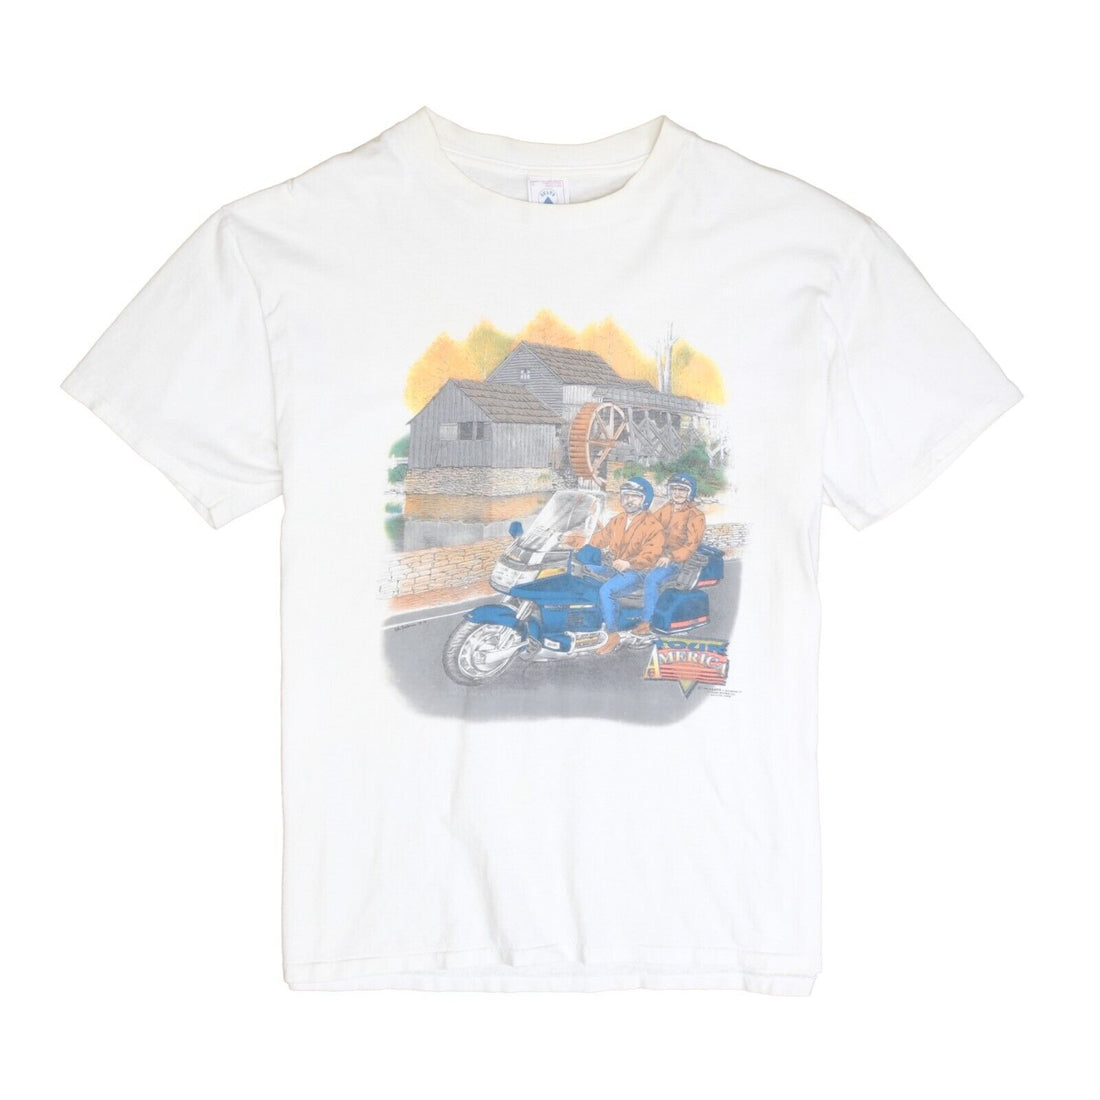 Vintage America Tour Motorcycle T-Shirt Size Large White 1995 90s